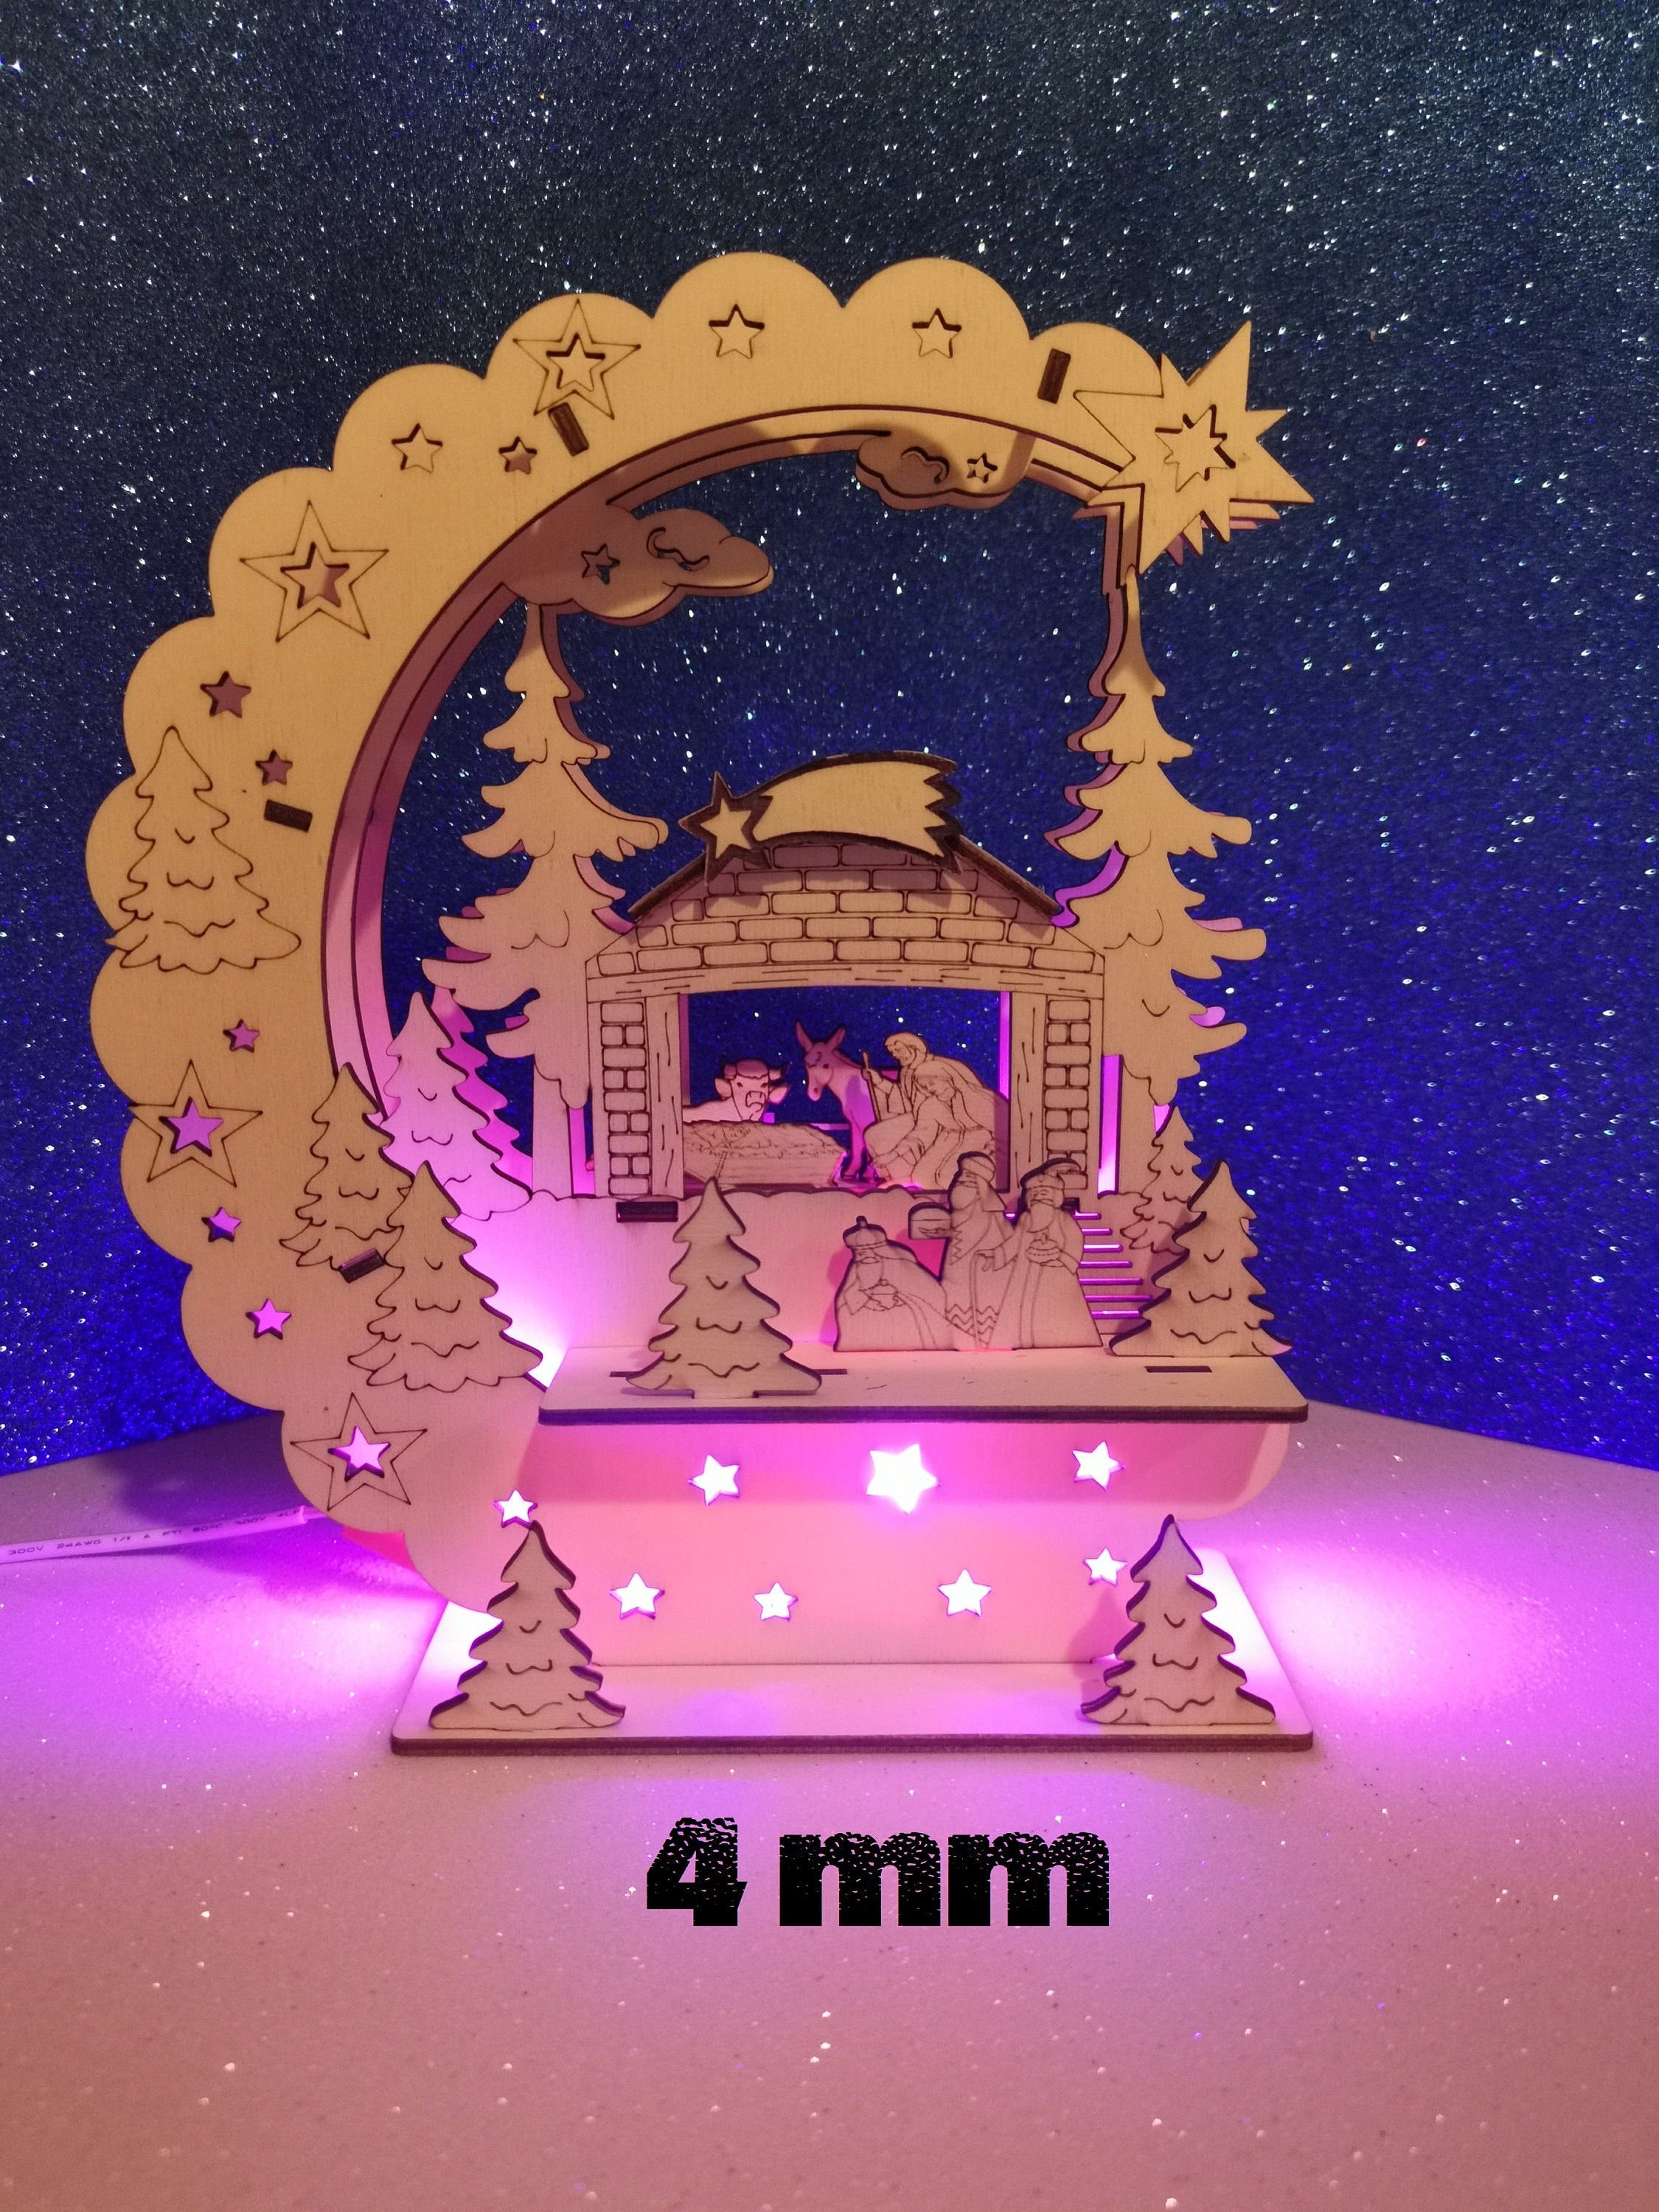 3D laser cut nativity nativity scene landscape, 4 mm thick